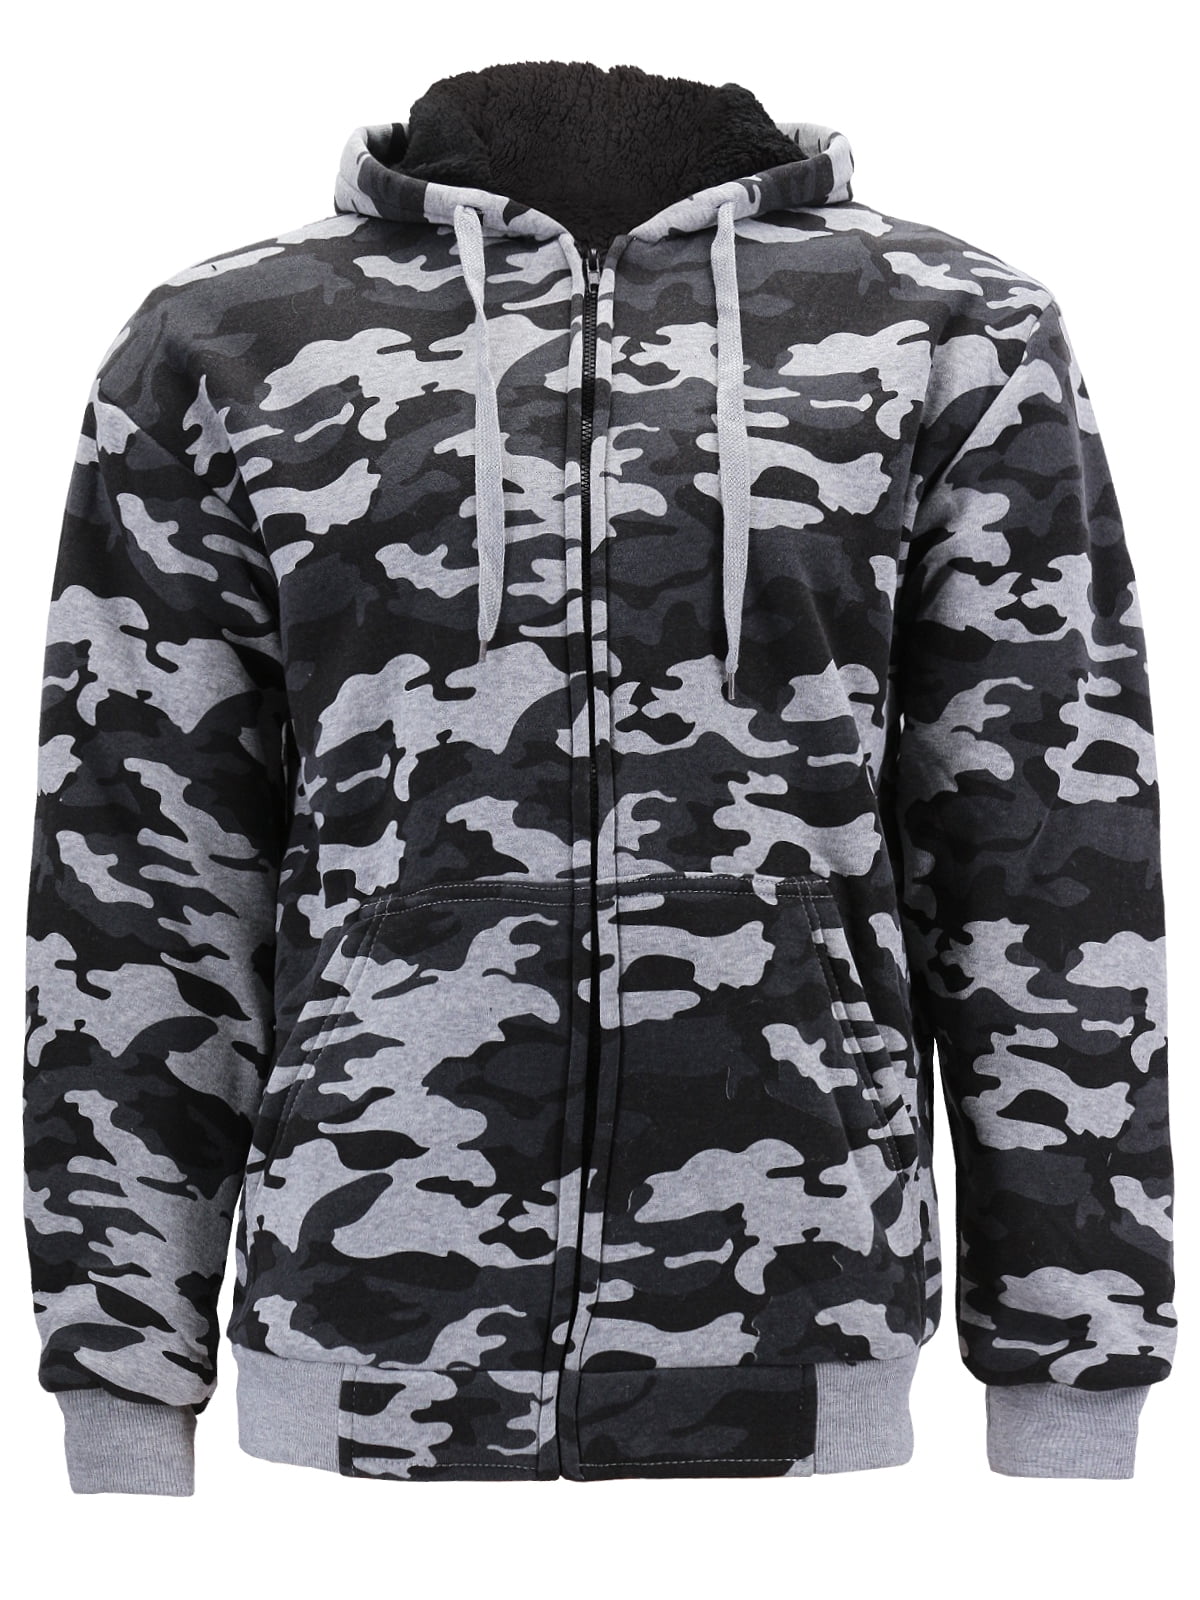 Men's Premium Athletic Soft Sherpa Lined Fleece Zip Up Hoodie Sweater Jacket (4026C - Grey, M)